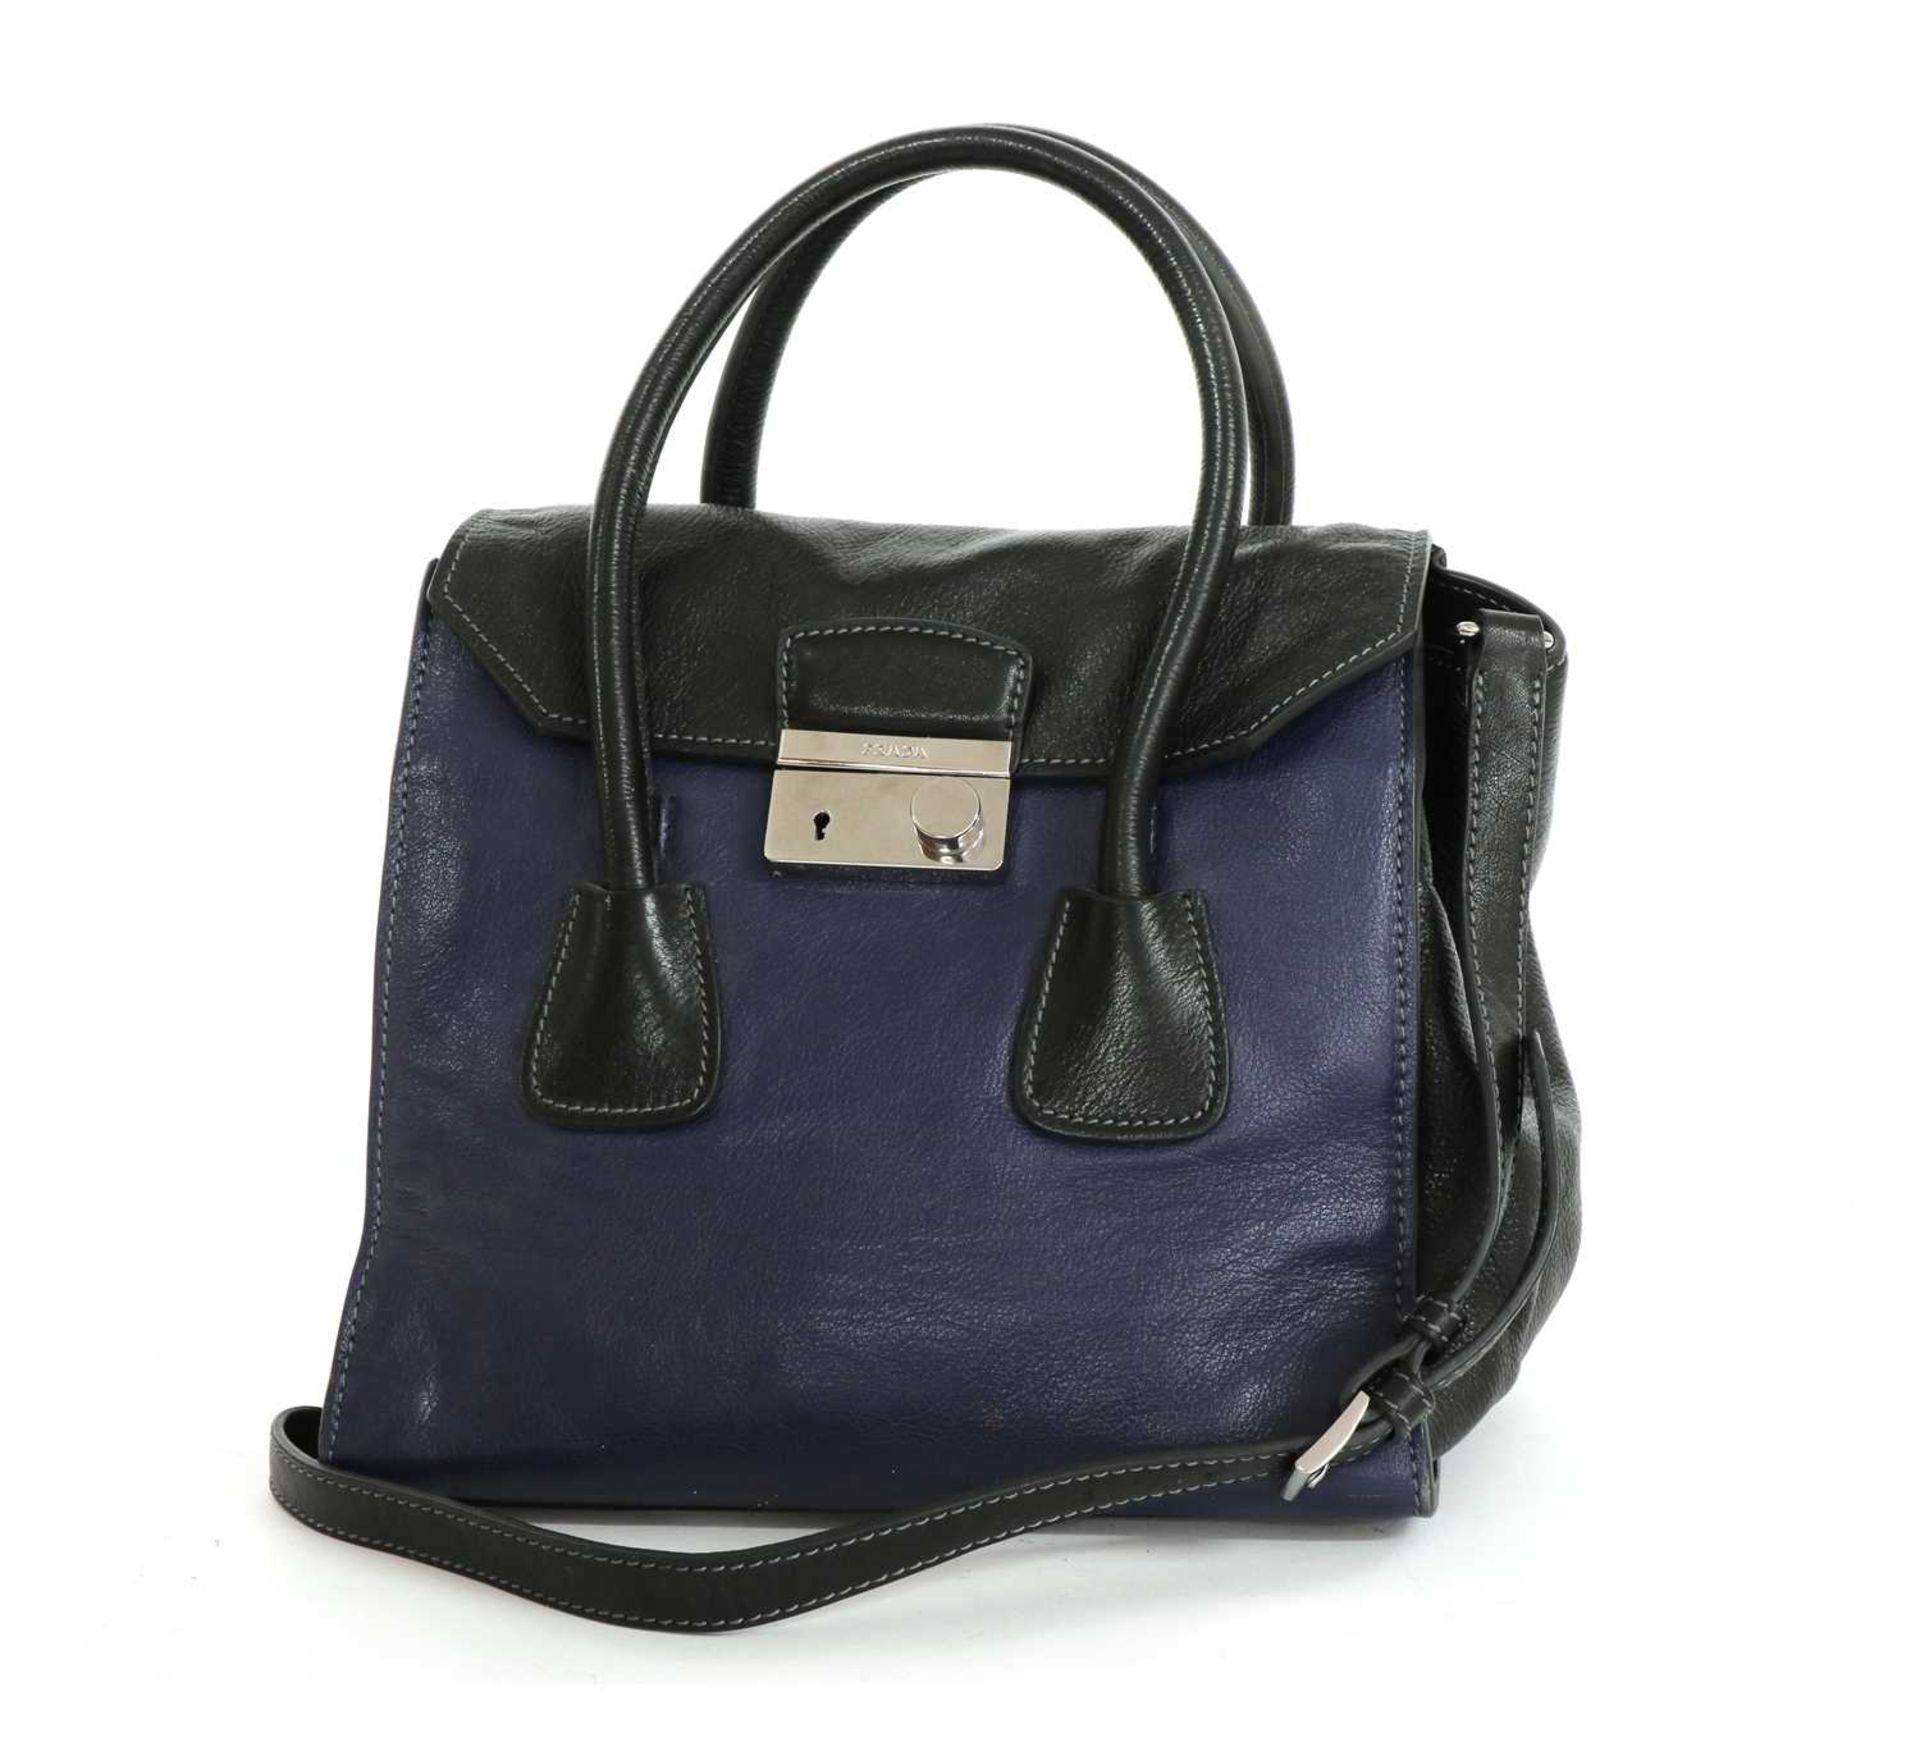 A Prada blue and black leather flap bag